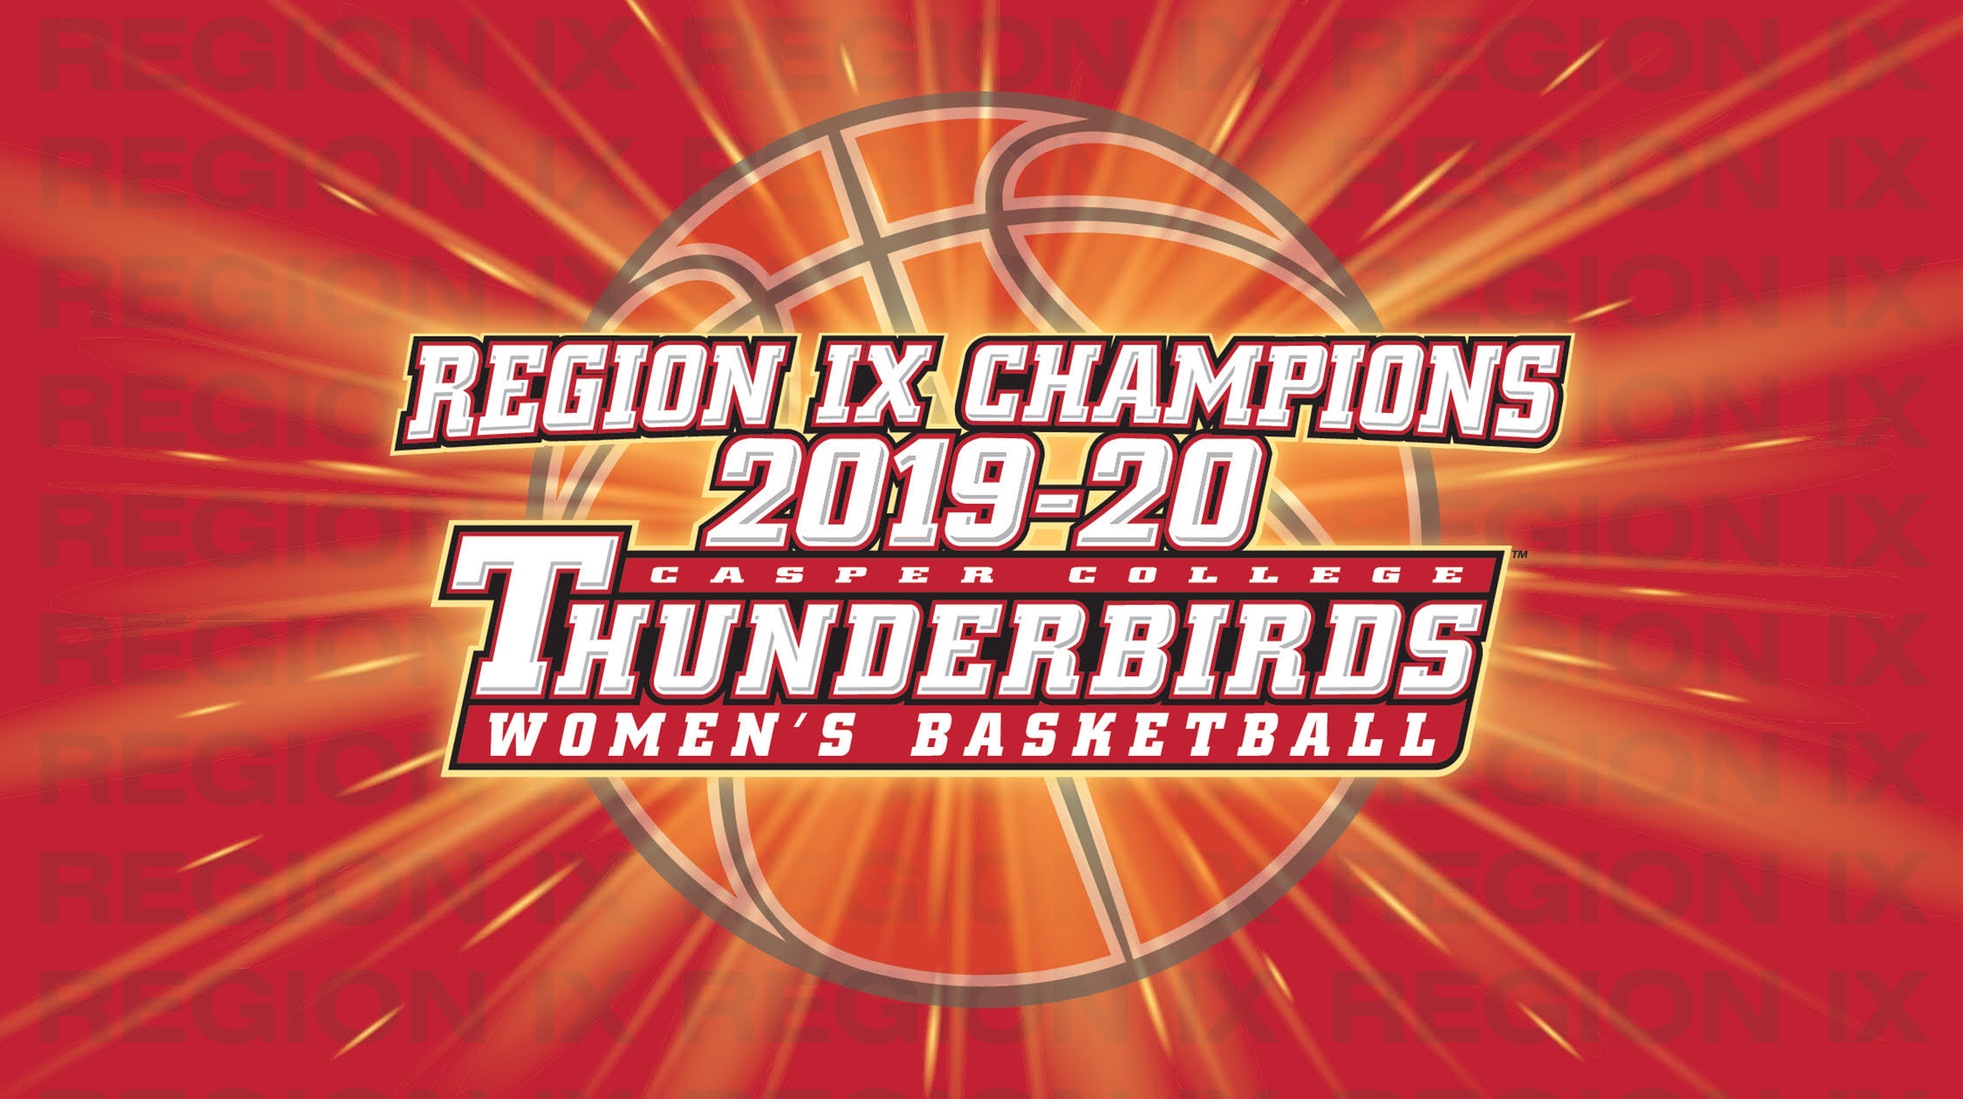 Region IX Champions image.